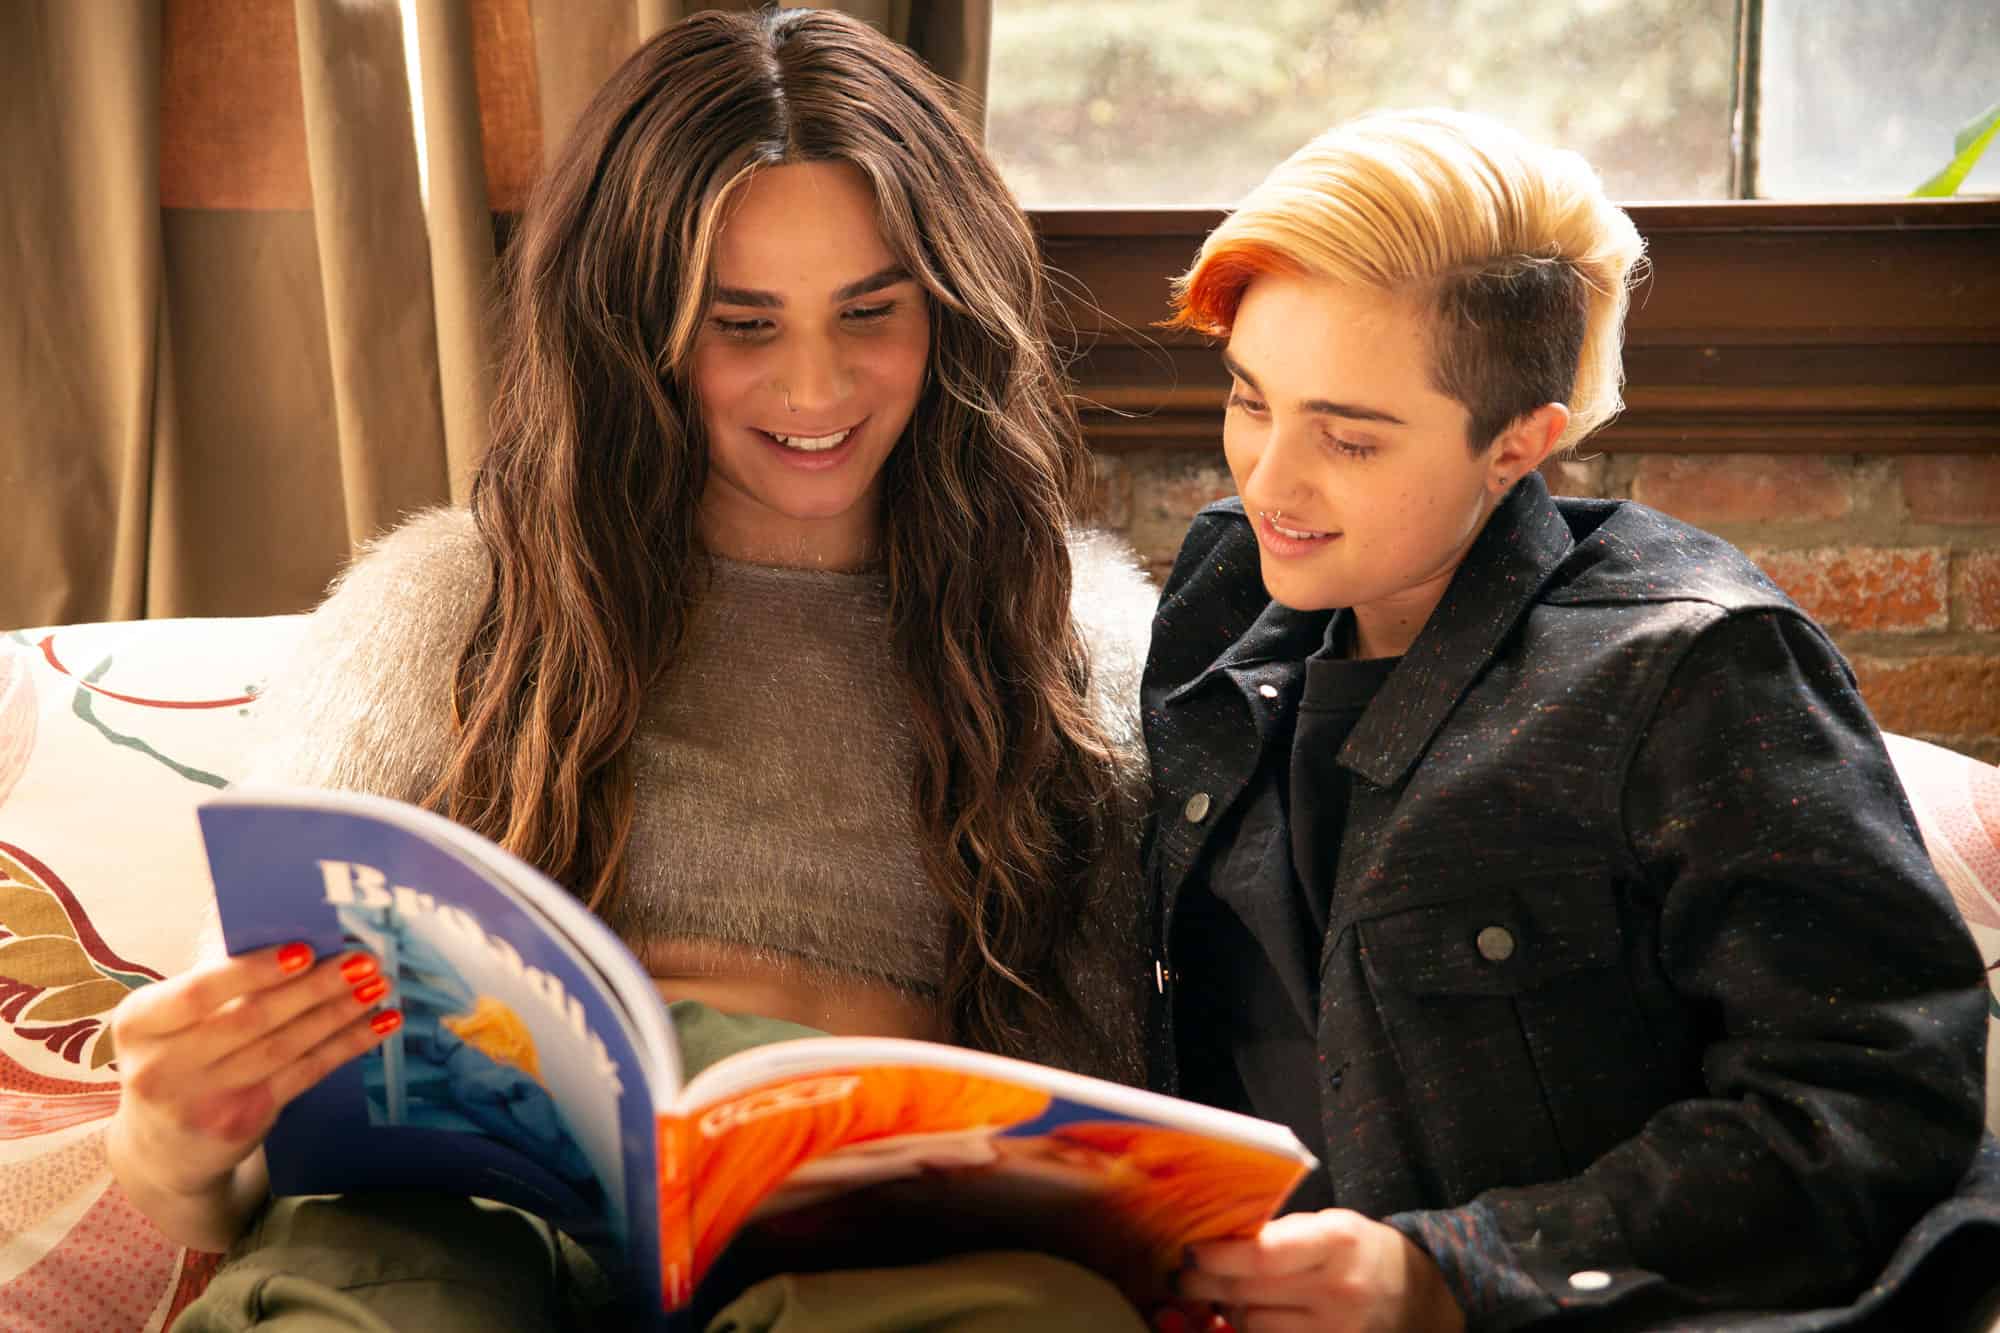 A transfeminine non-binary person and transmasculine gender nonconforming person reading a magazine together